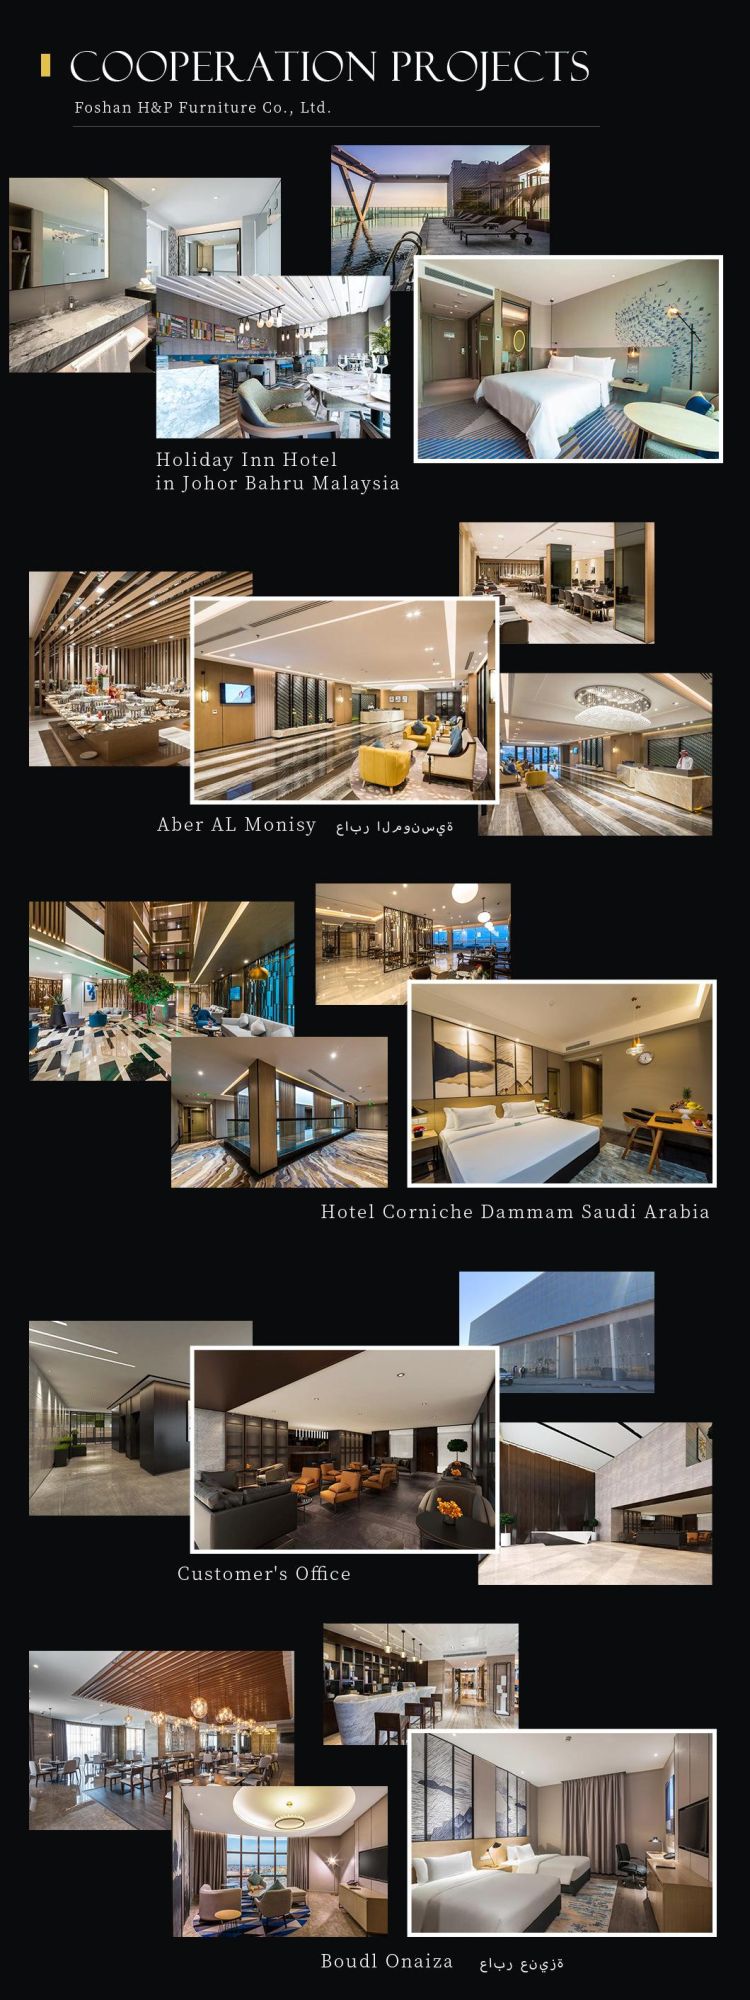 Foshan Furniture Factory Custom Made Modern 5 Star Hotel Furniture Complete Bedroom Sets